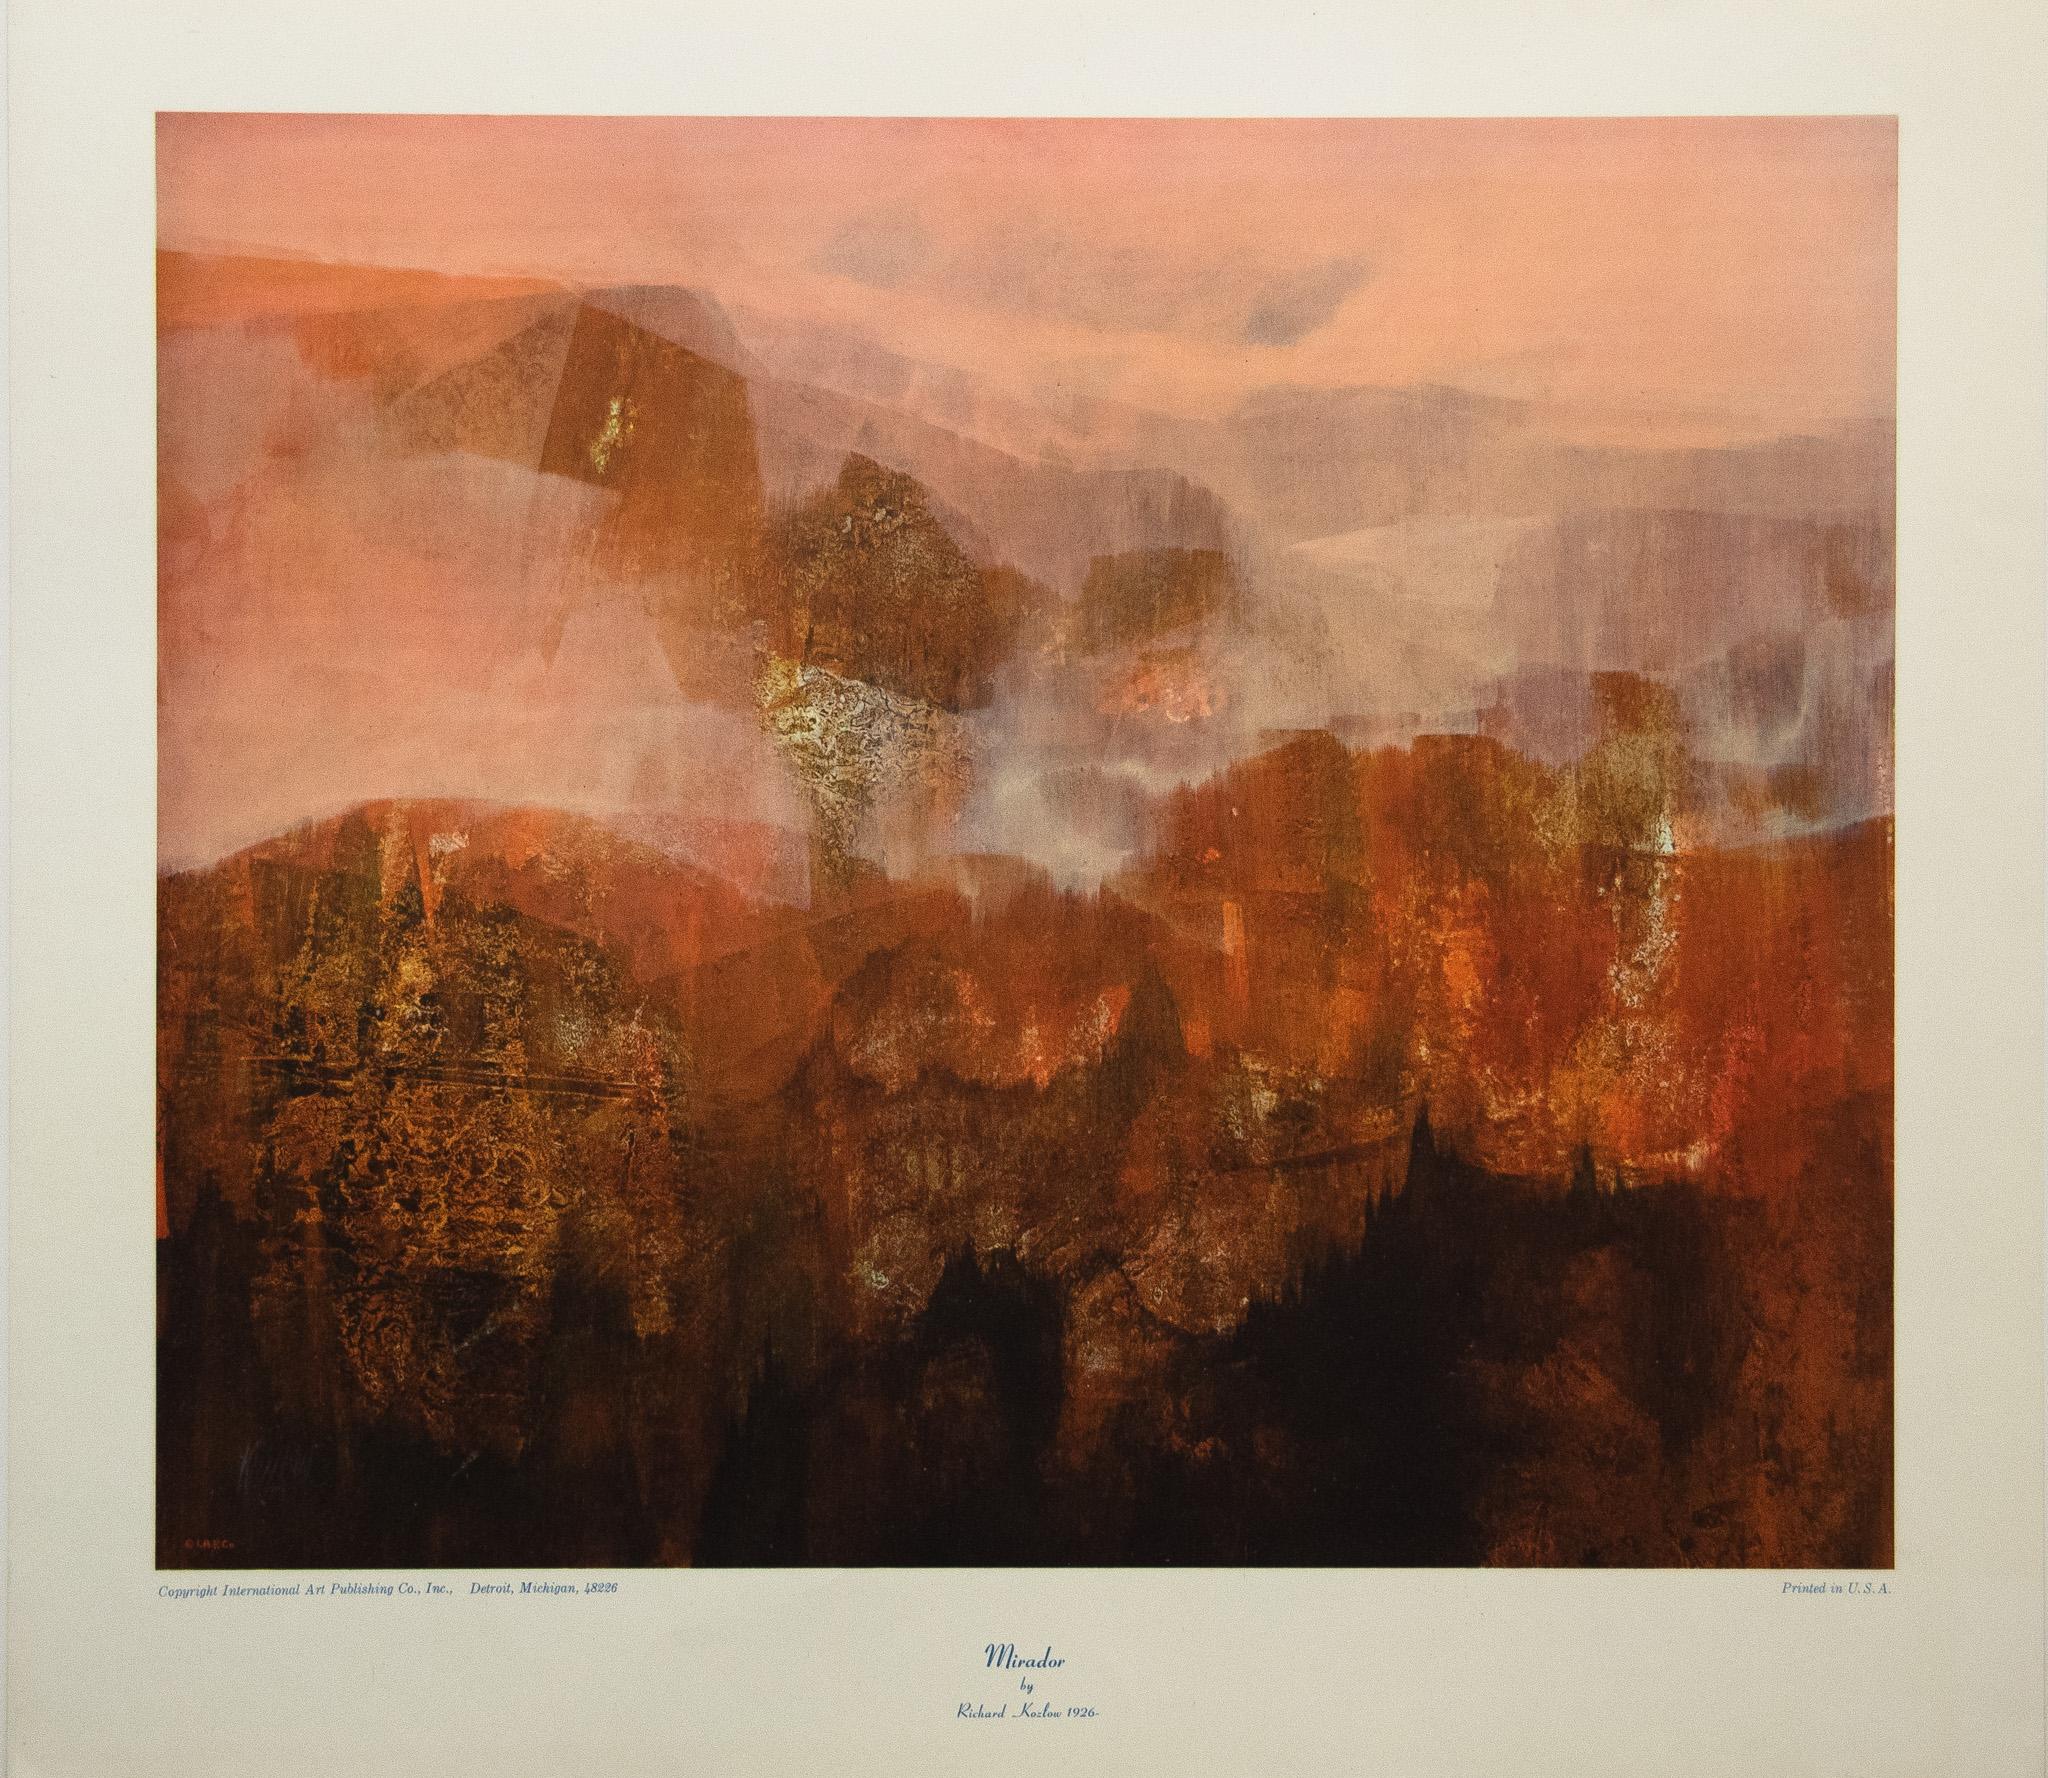 Richard Kozlow  Landscape Print - "Mirador" By Richard Kozlow. Printed in U.S.A.